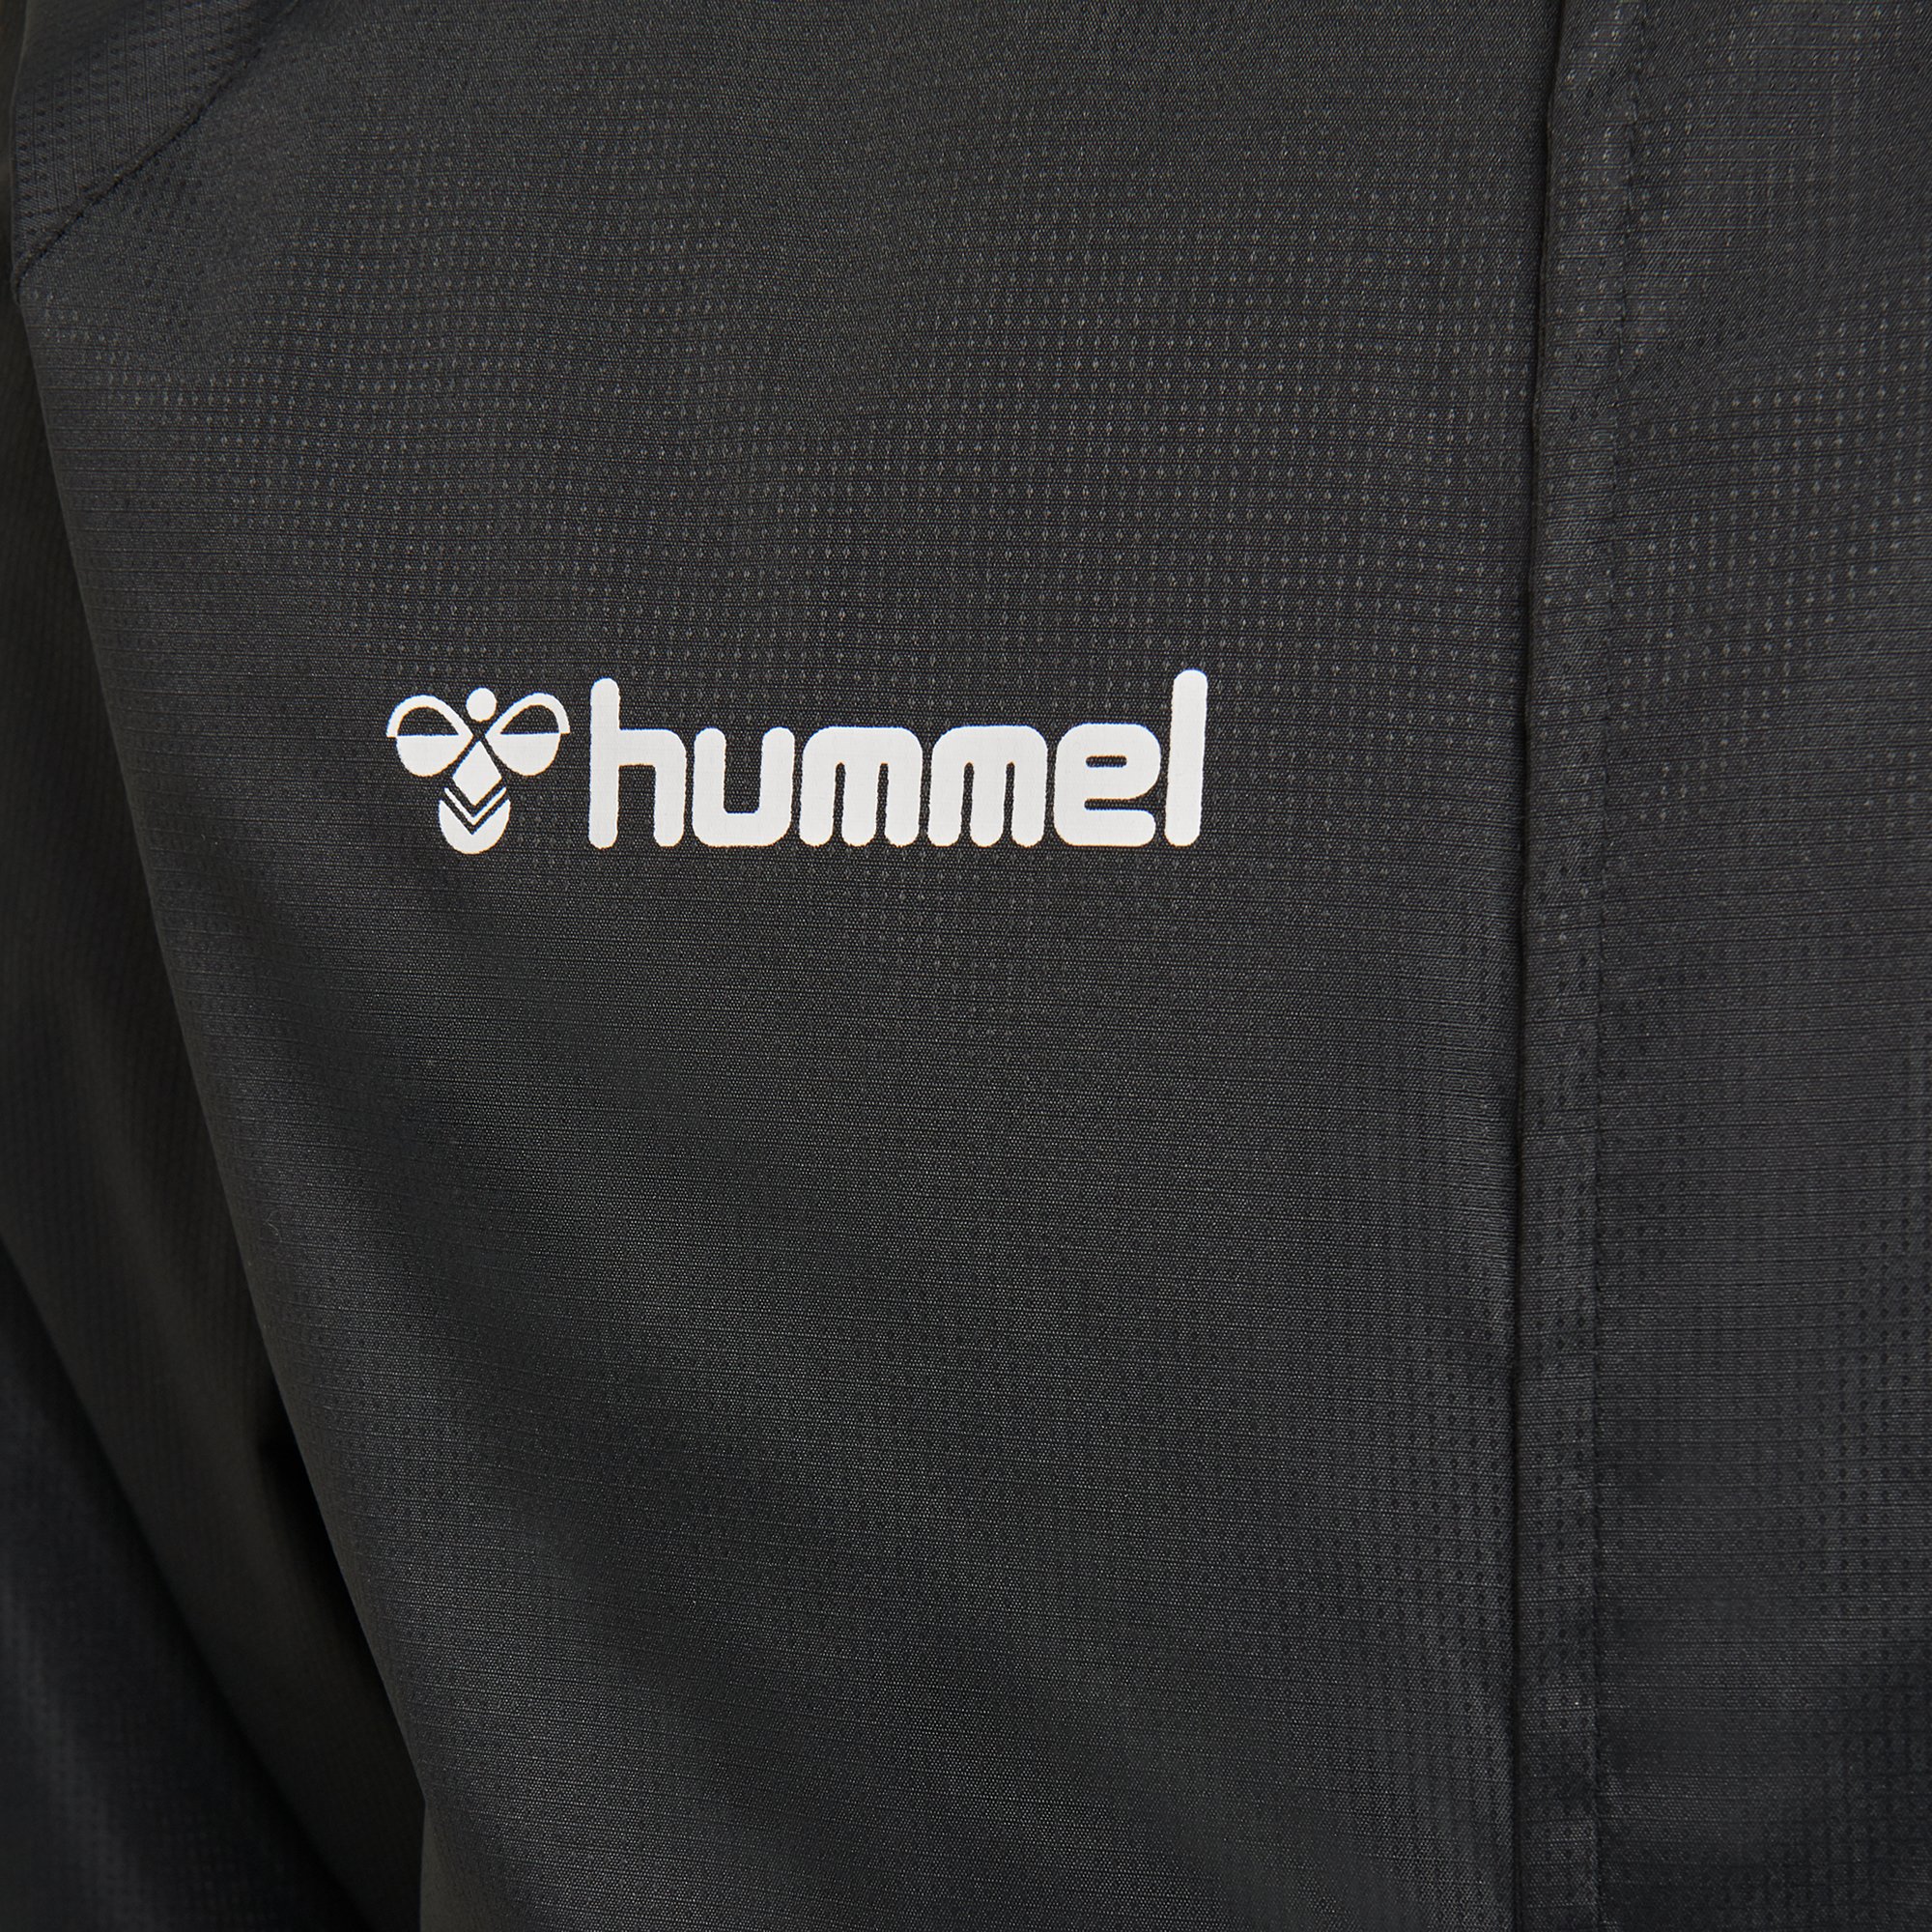 Hummel Authentic Bench Jacket